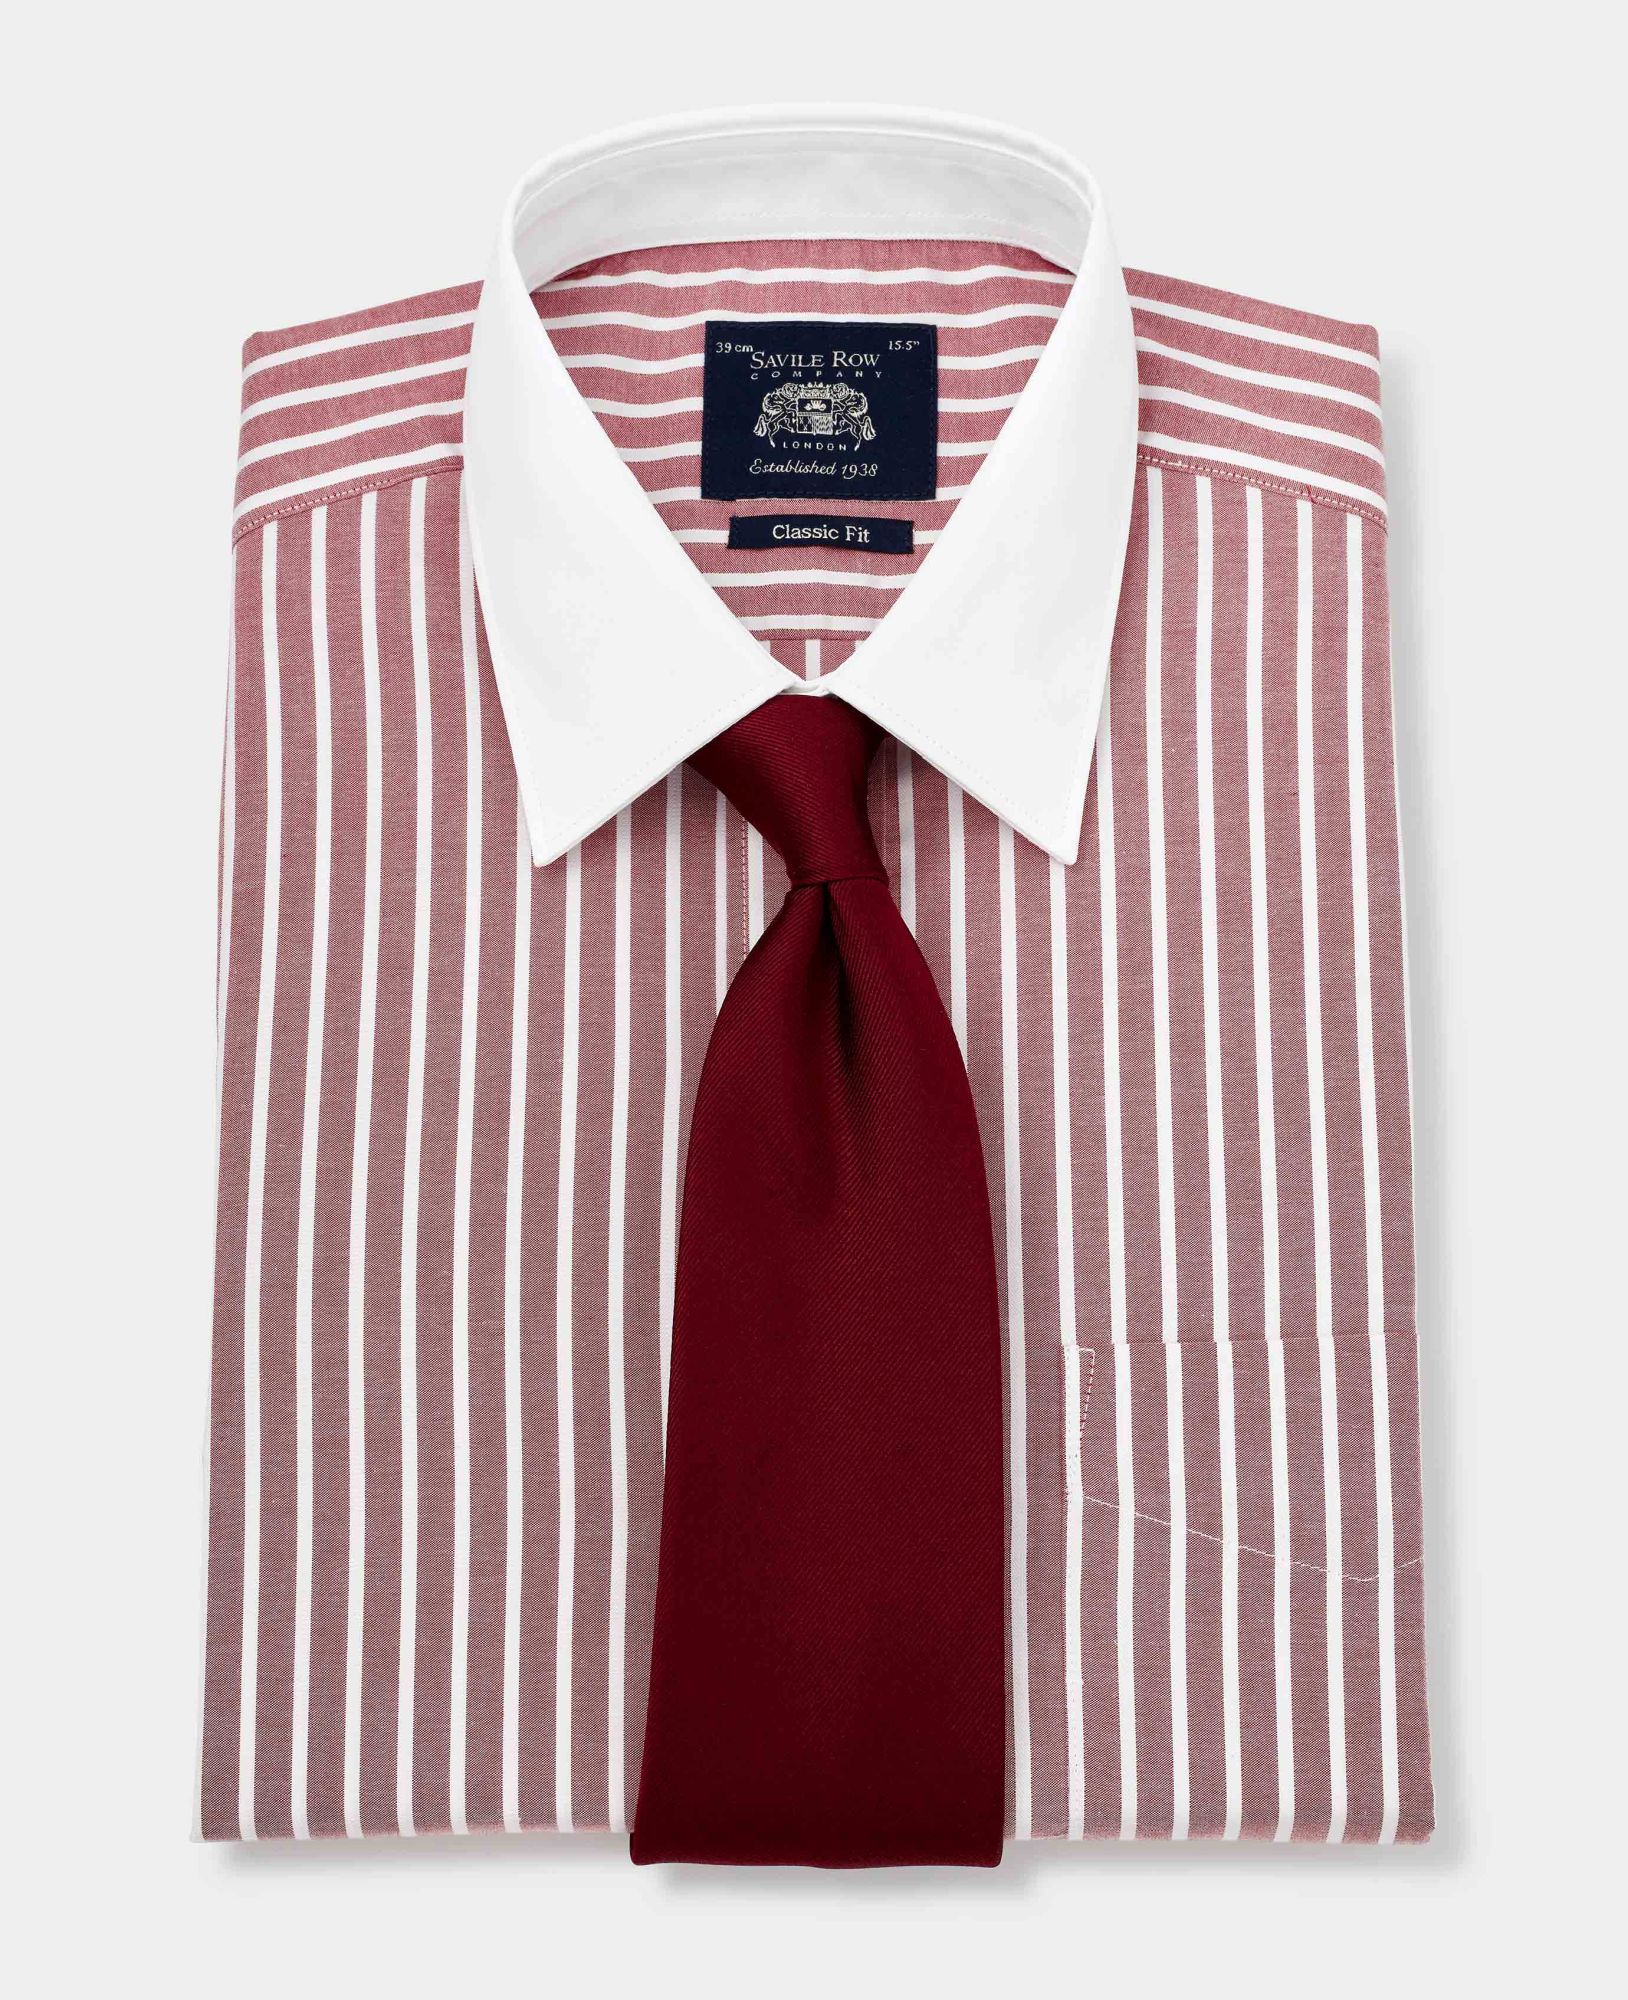 Dark Red White Stripe Classic Fit Shirt With White Collar & Cuffs - Double Cuff 19